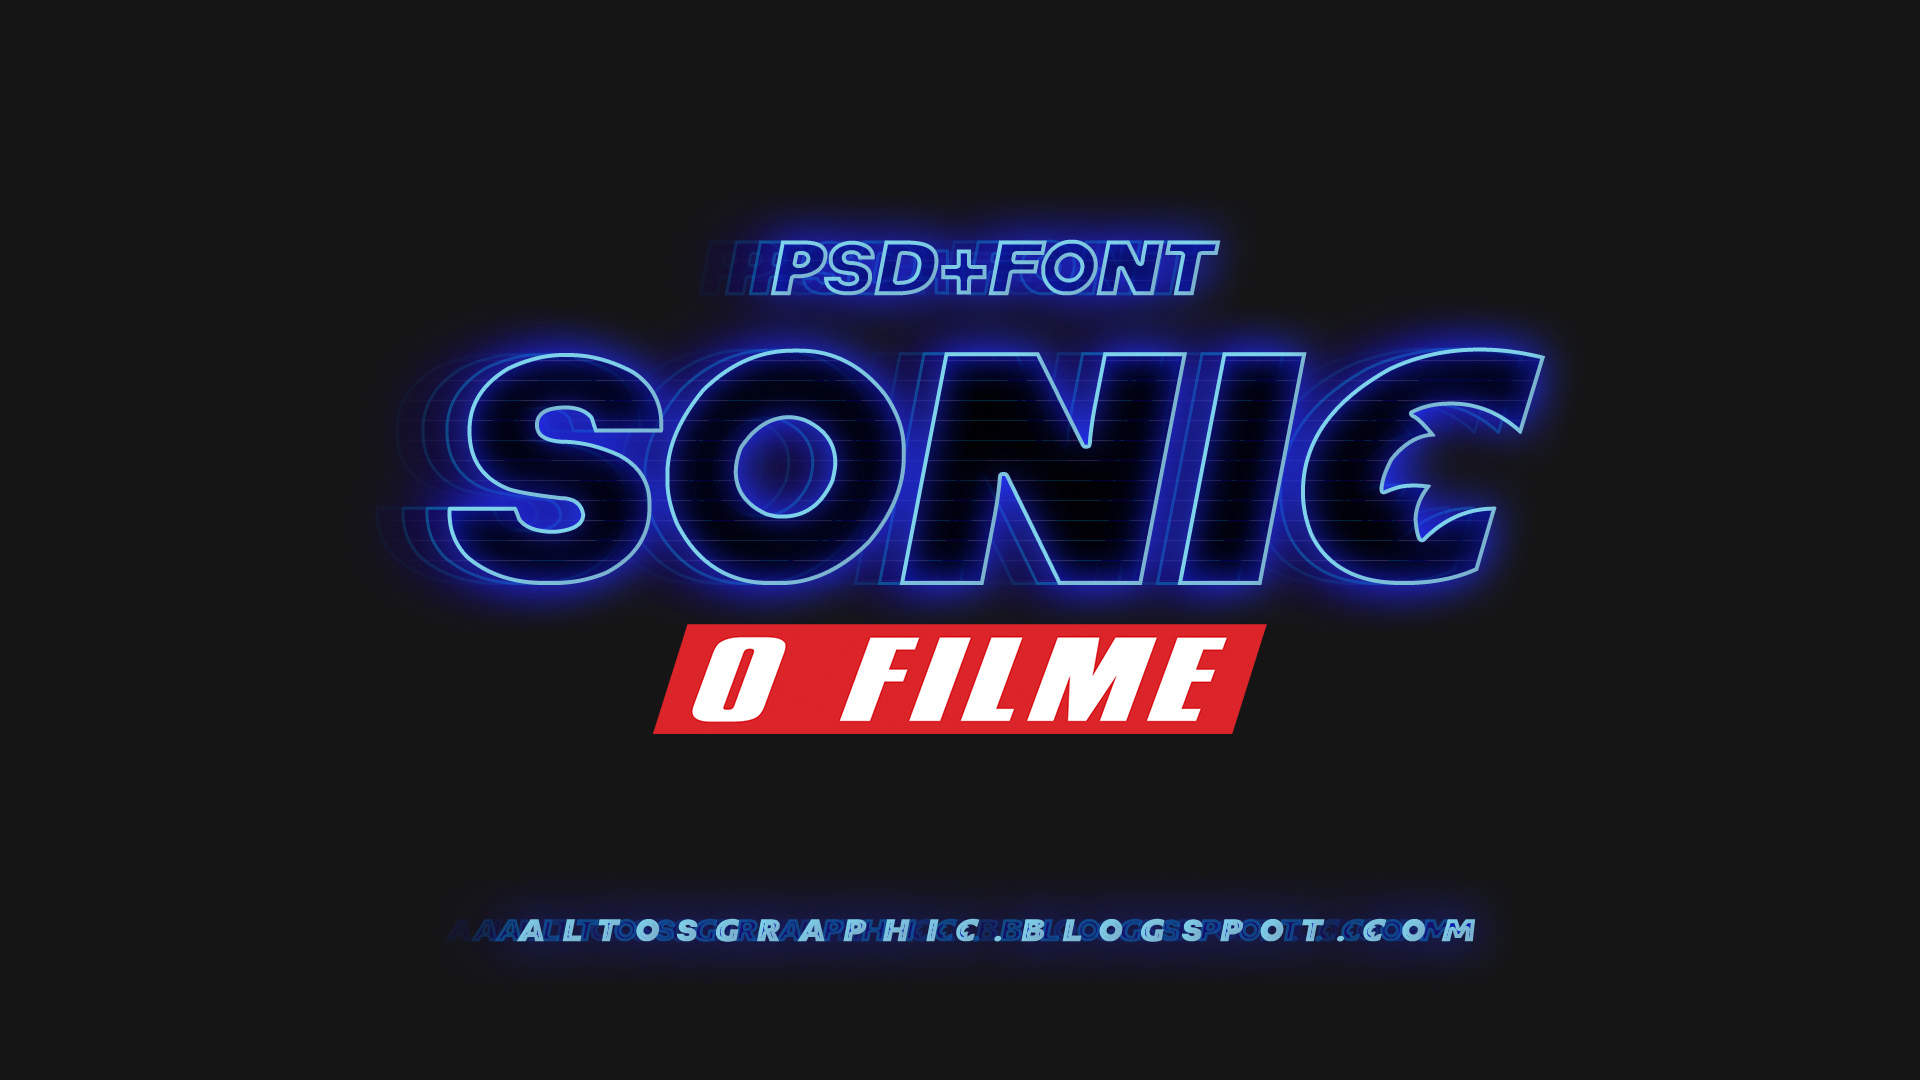 File:Sonic - O Filme Logo.png - Wikimedia Commons